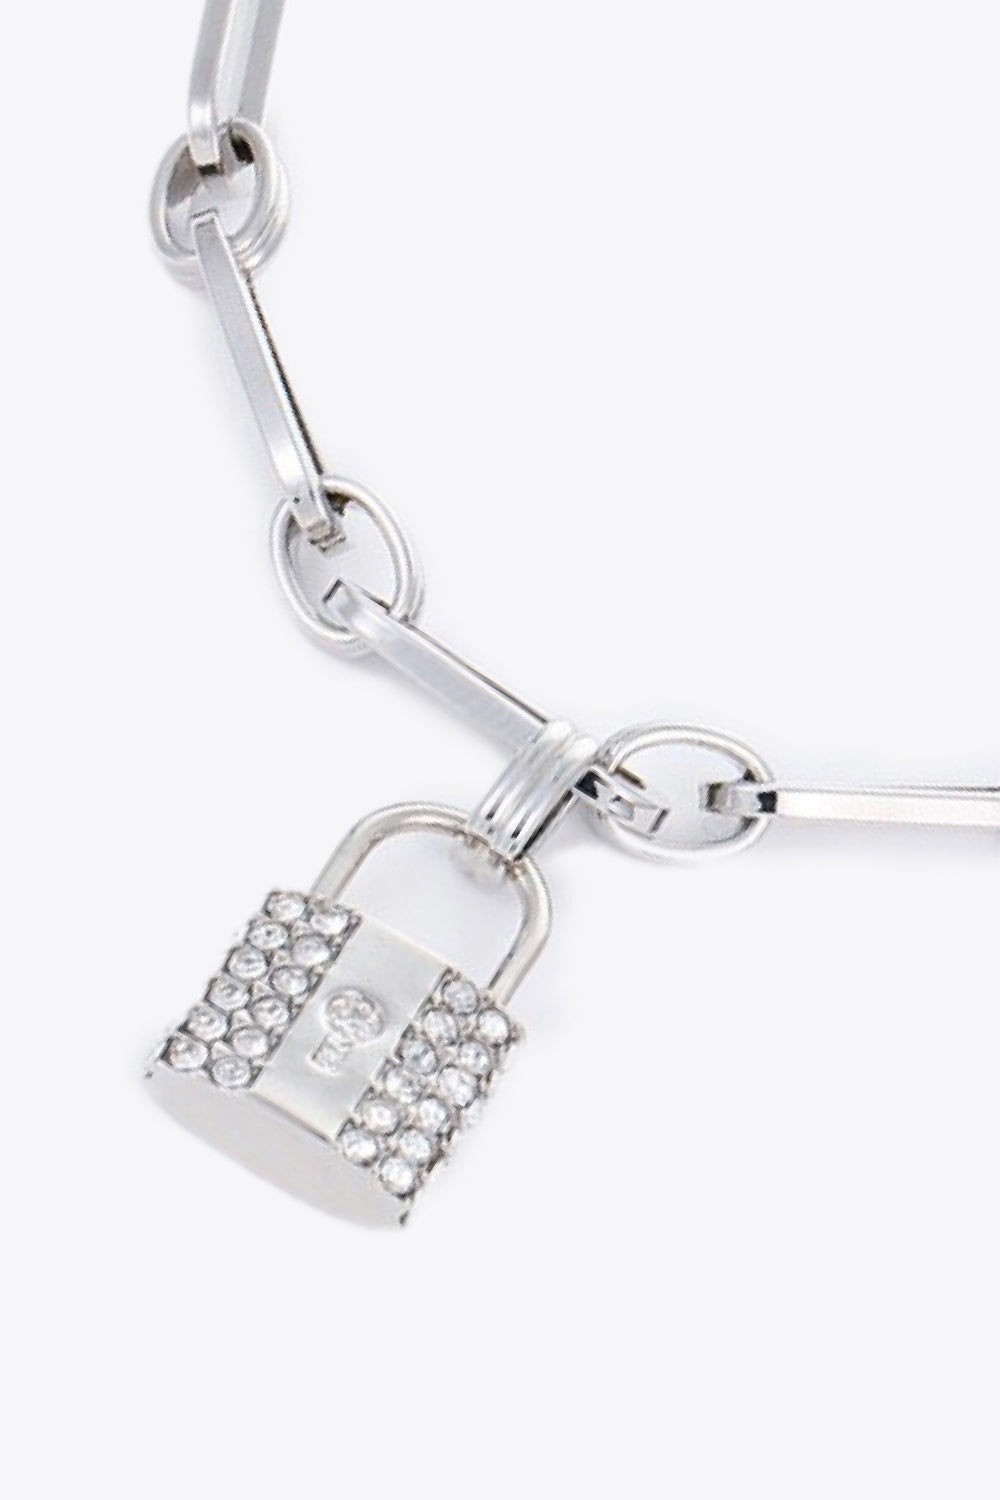 Lock Charm Chain Bracelet - Silver / One Size - Women’s Jewelry - Bracelets - 3 - 2024